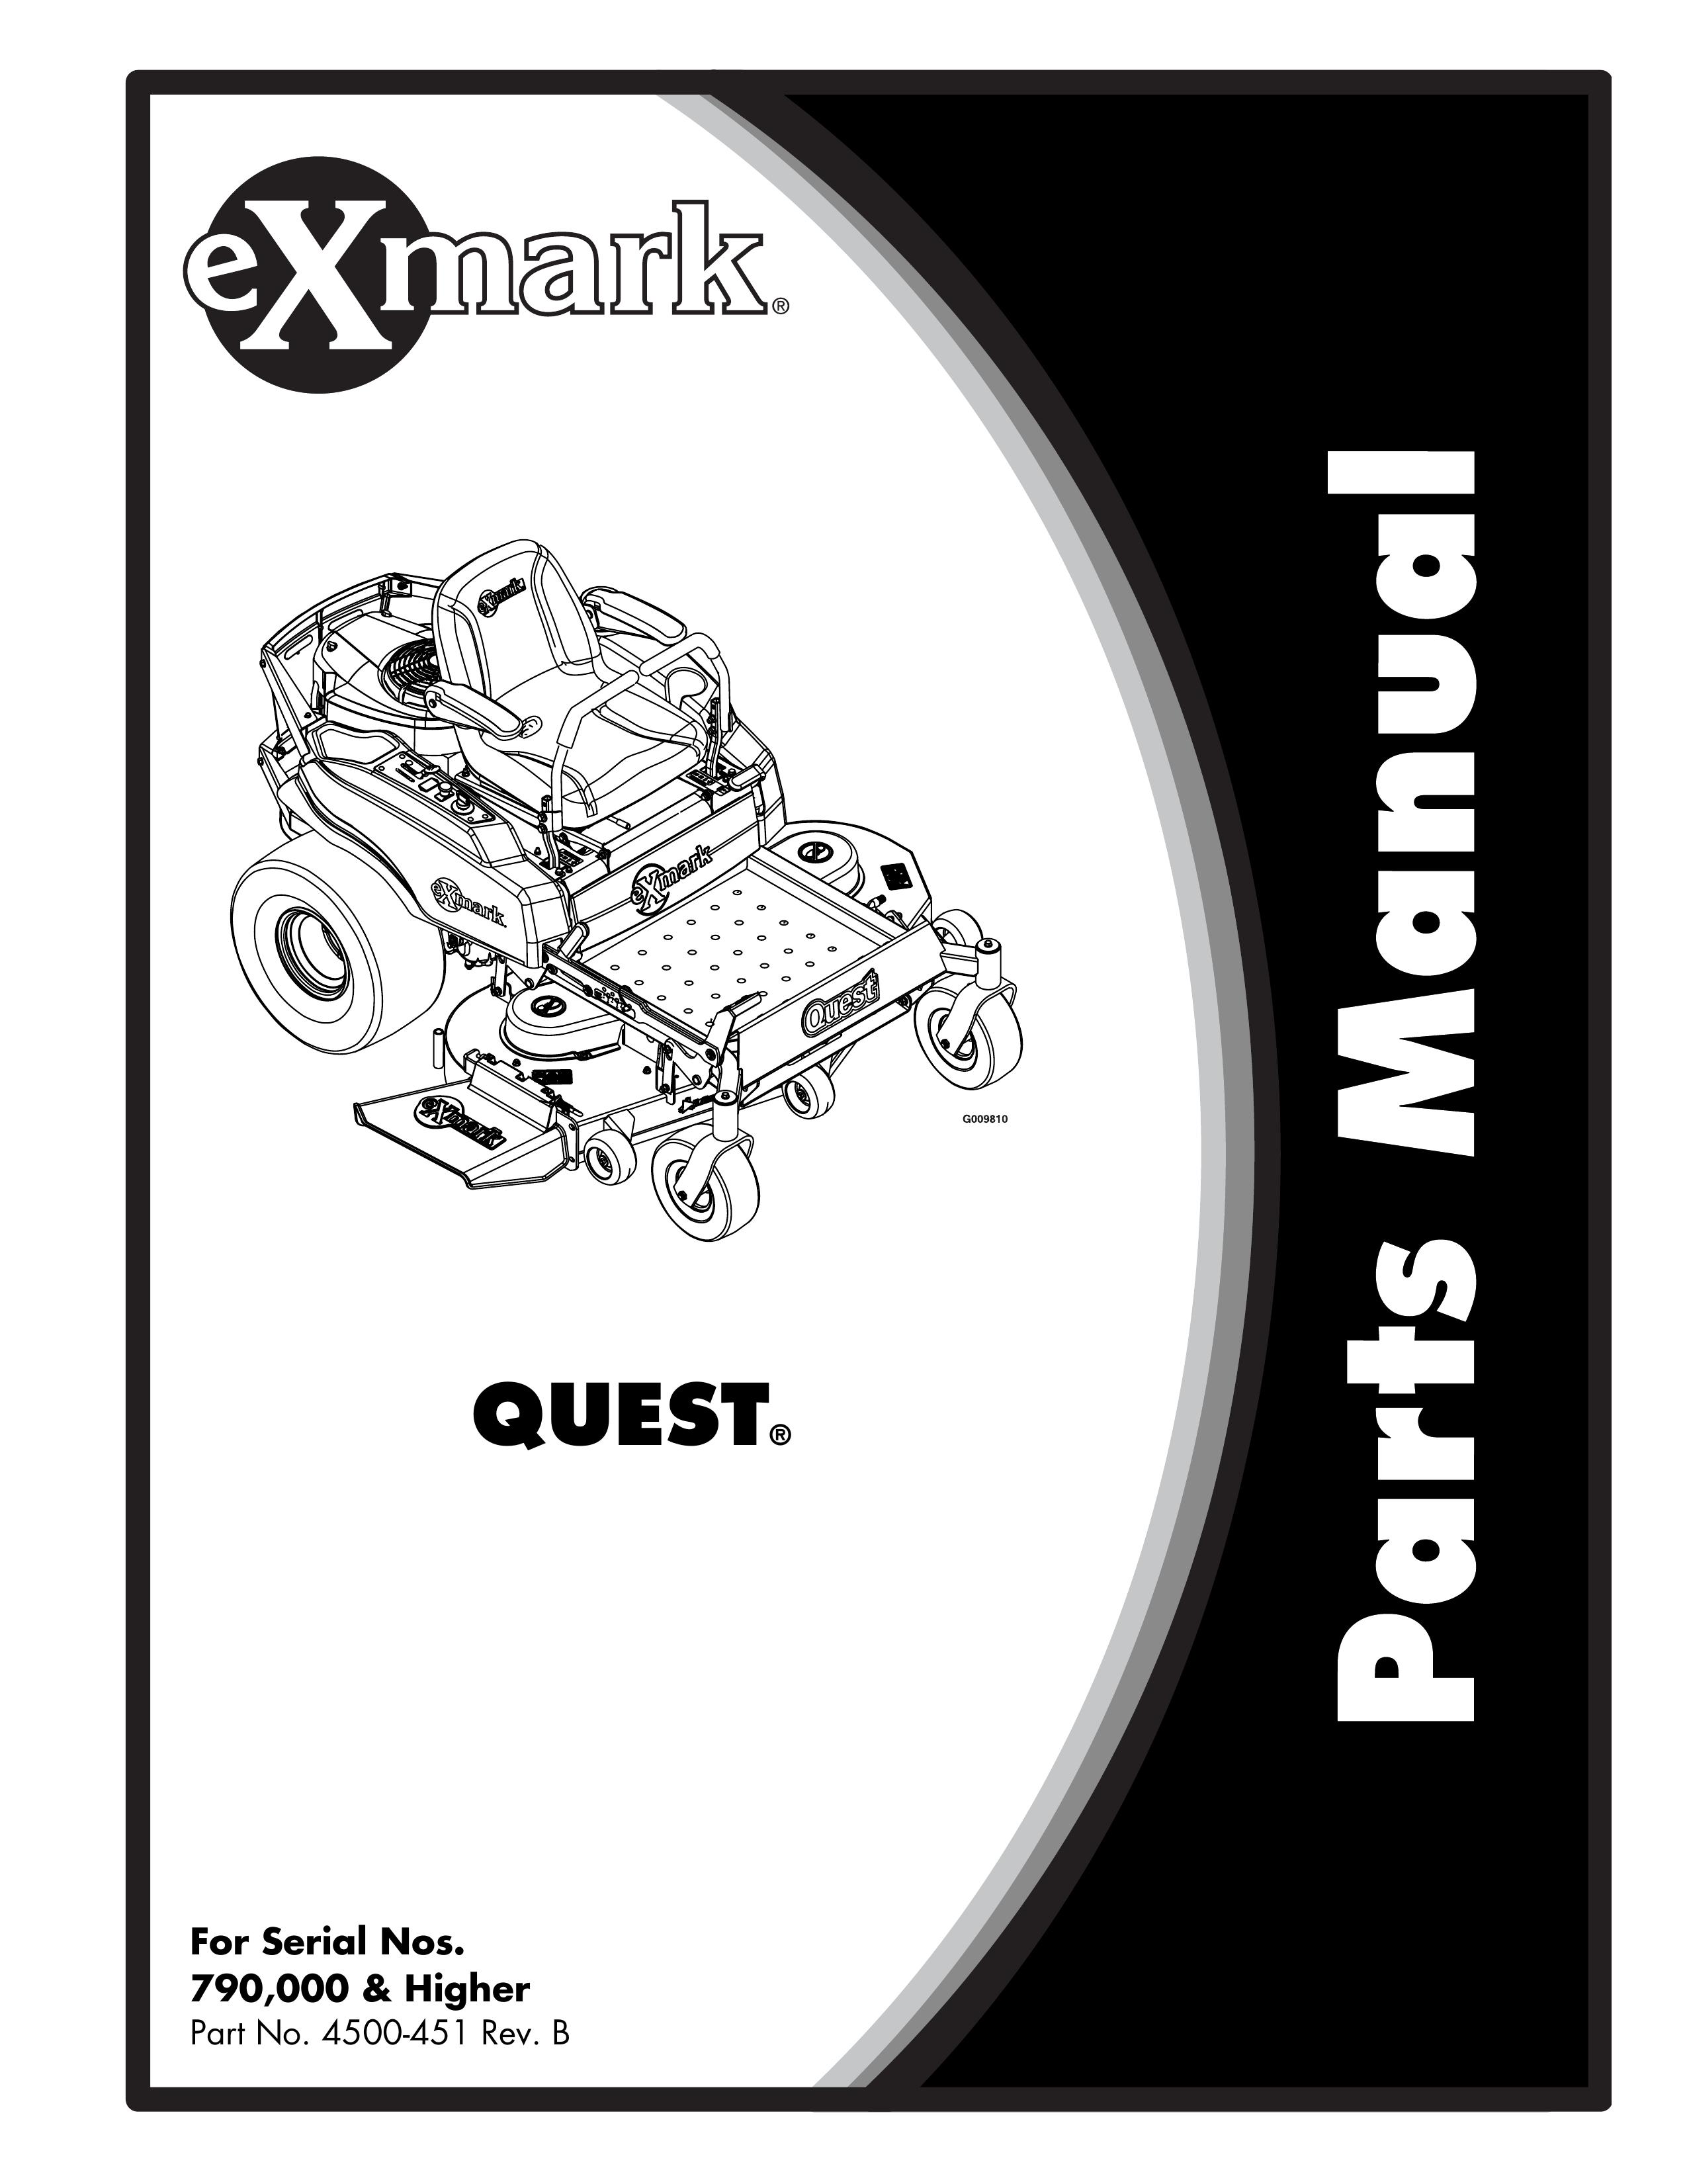 Exmark 4500-451 Lawn Mower User Manual